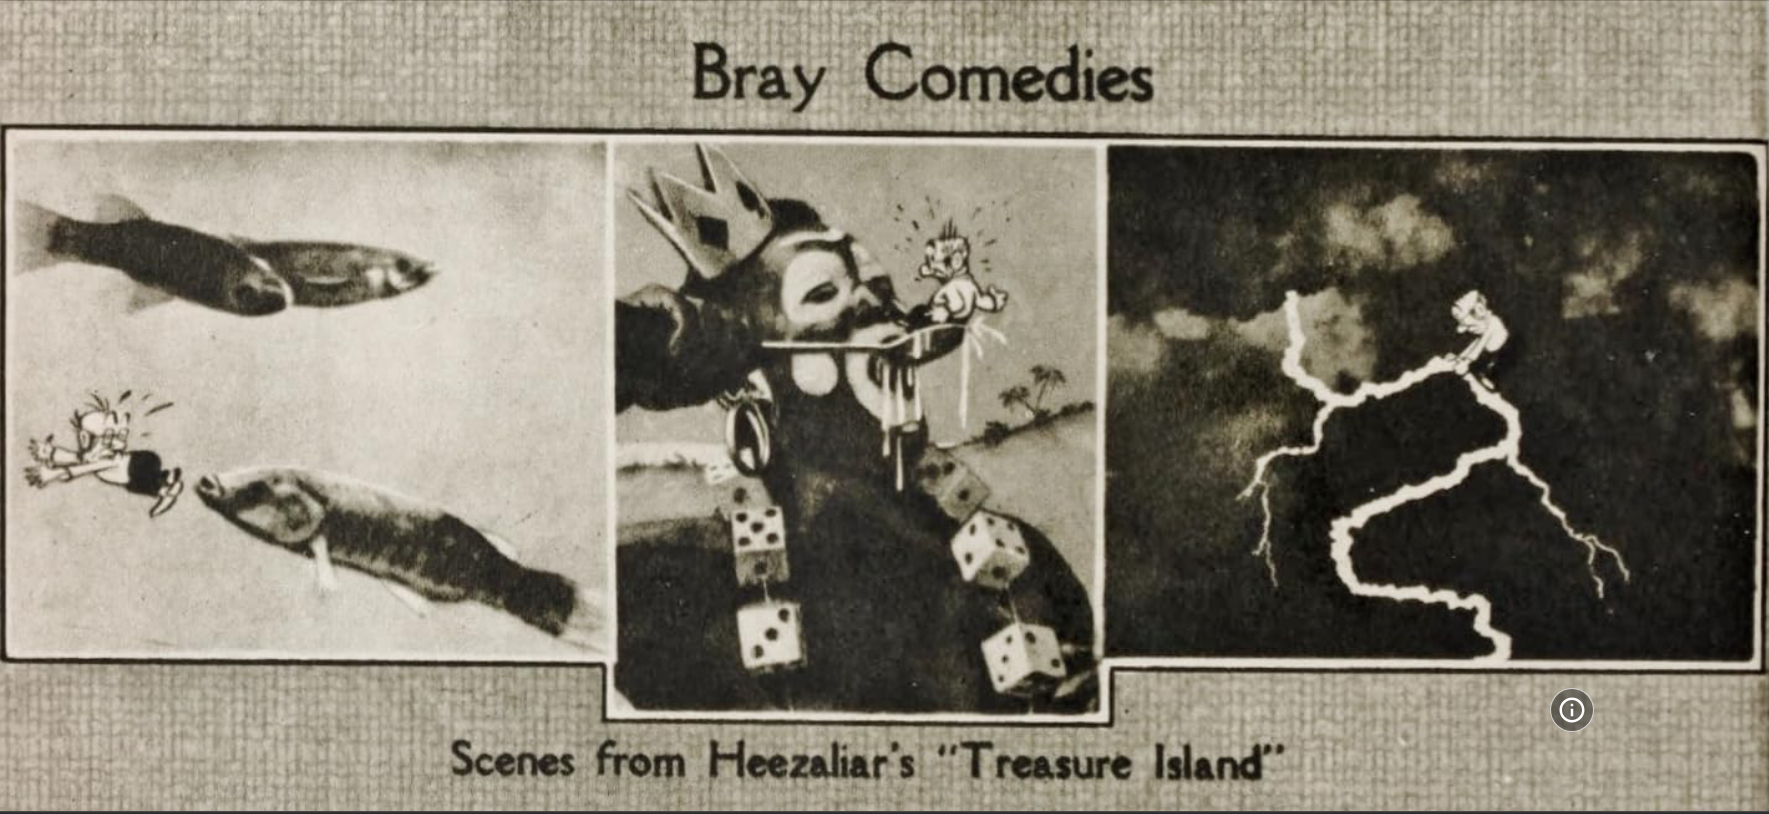 Pictures of three frames shown in Colonel Heeza Liar's Treasure Island